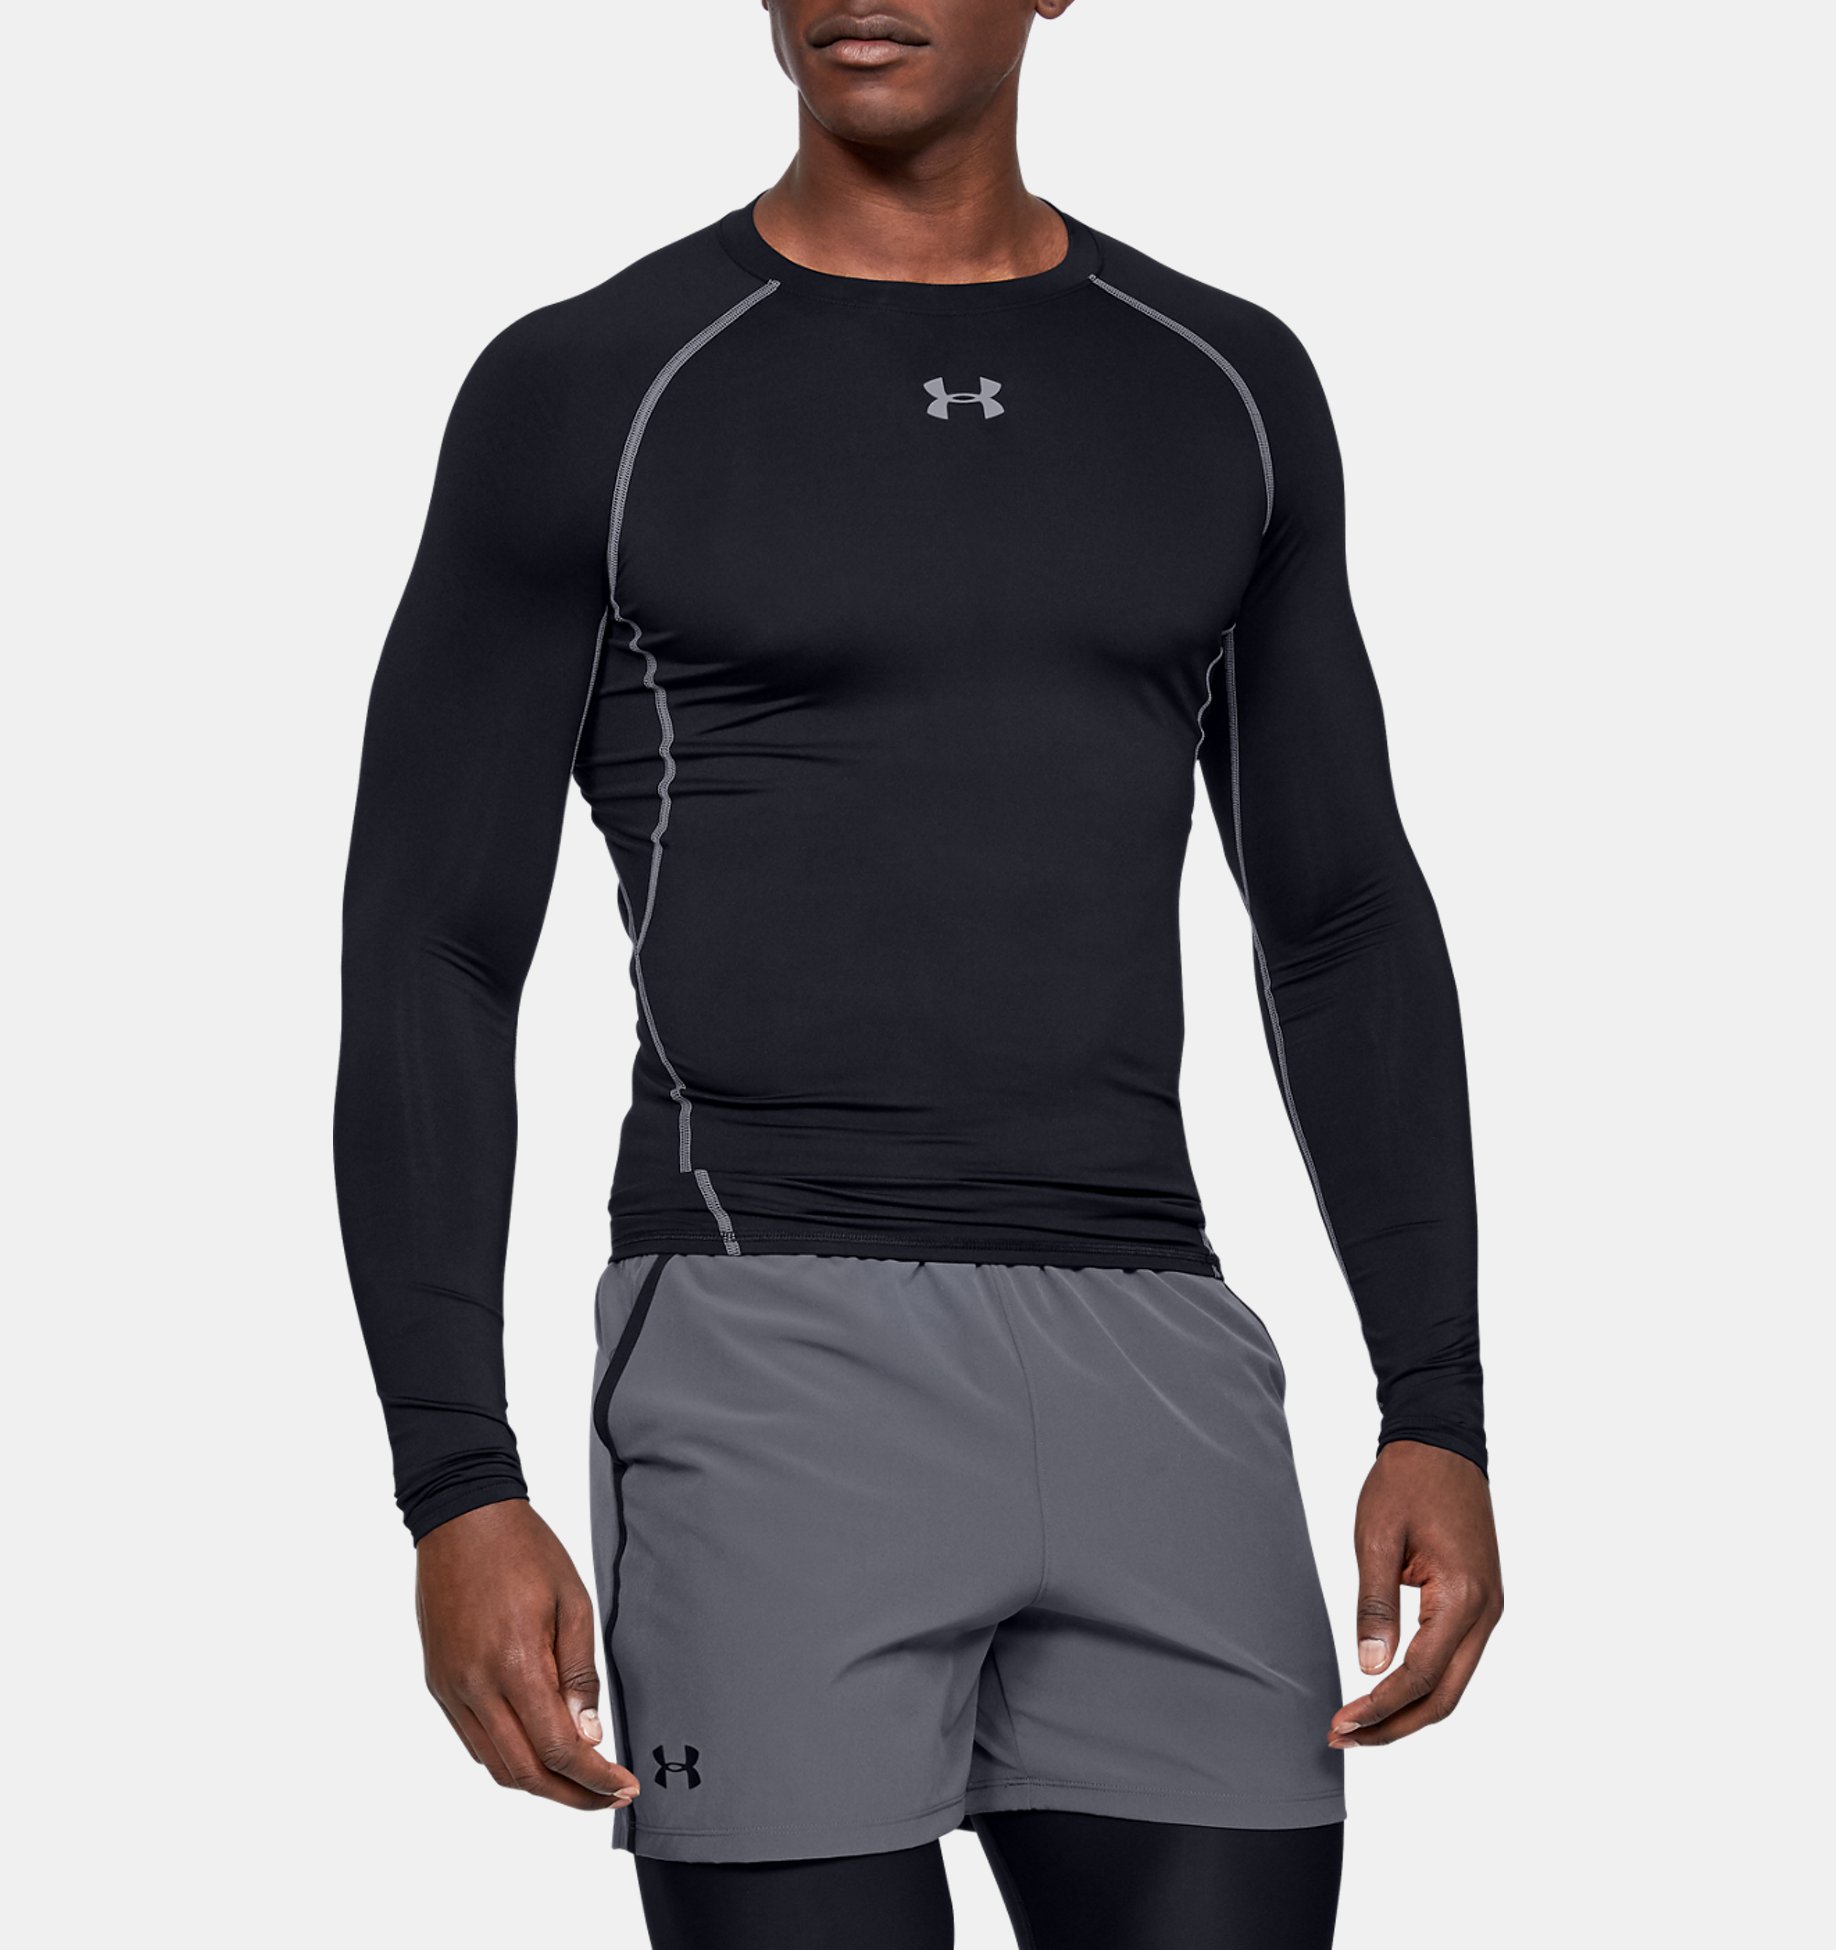 Mens Compression Under Base Layer Vest Tank Long Sleeve T Shirt Gym Sport Tops 